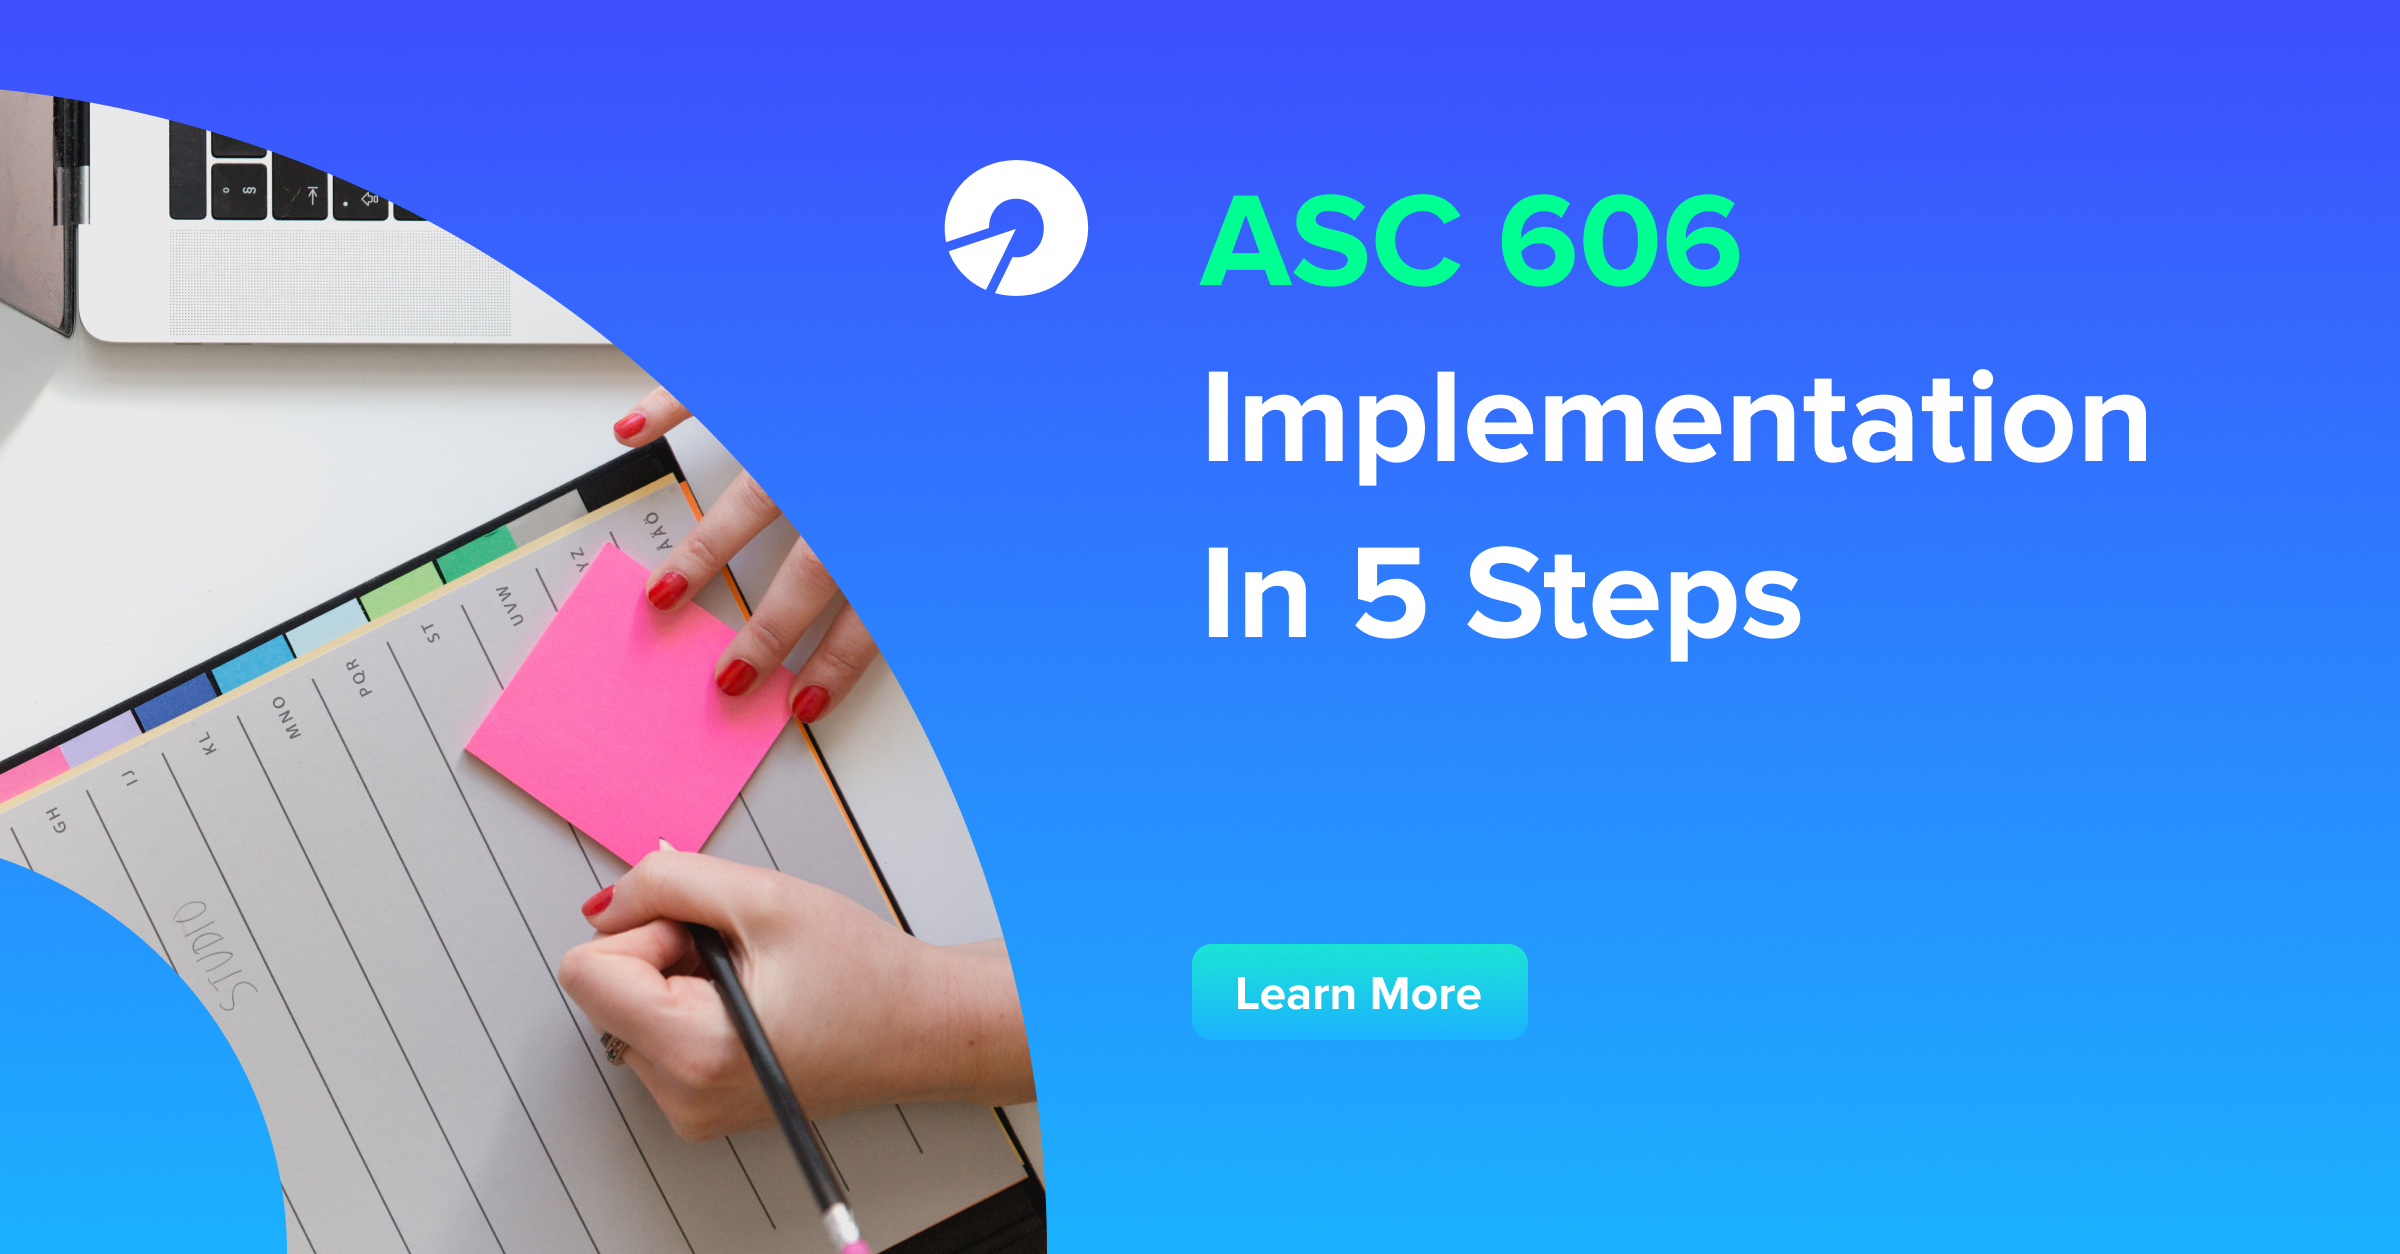 ASC 606 Implementation In 5 Steps